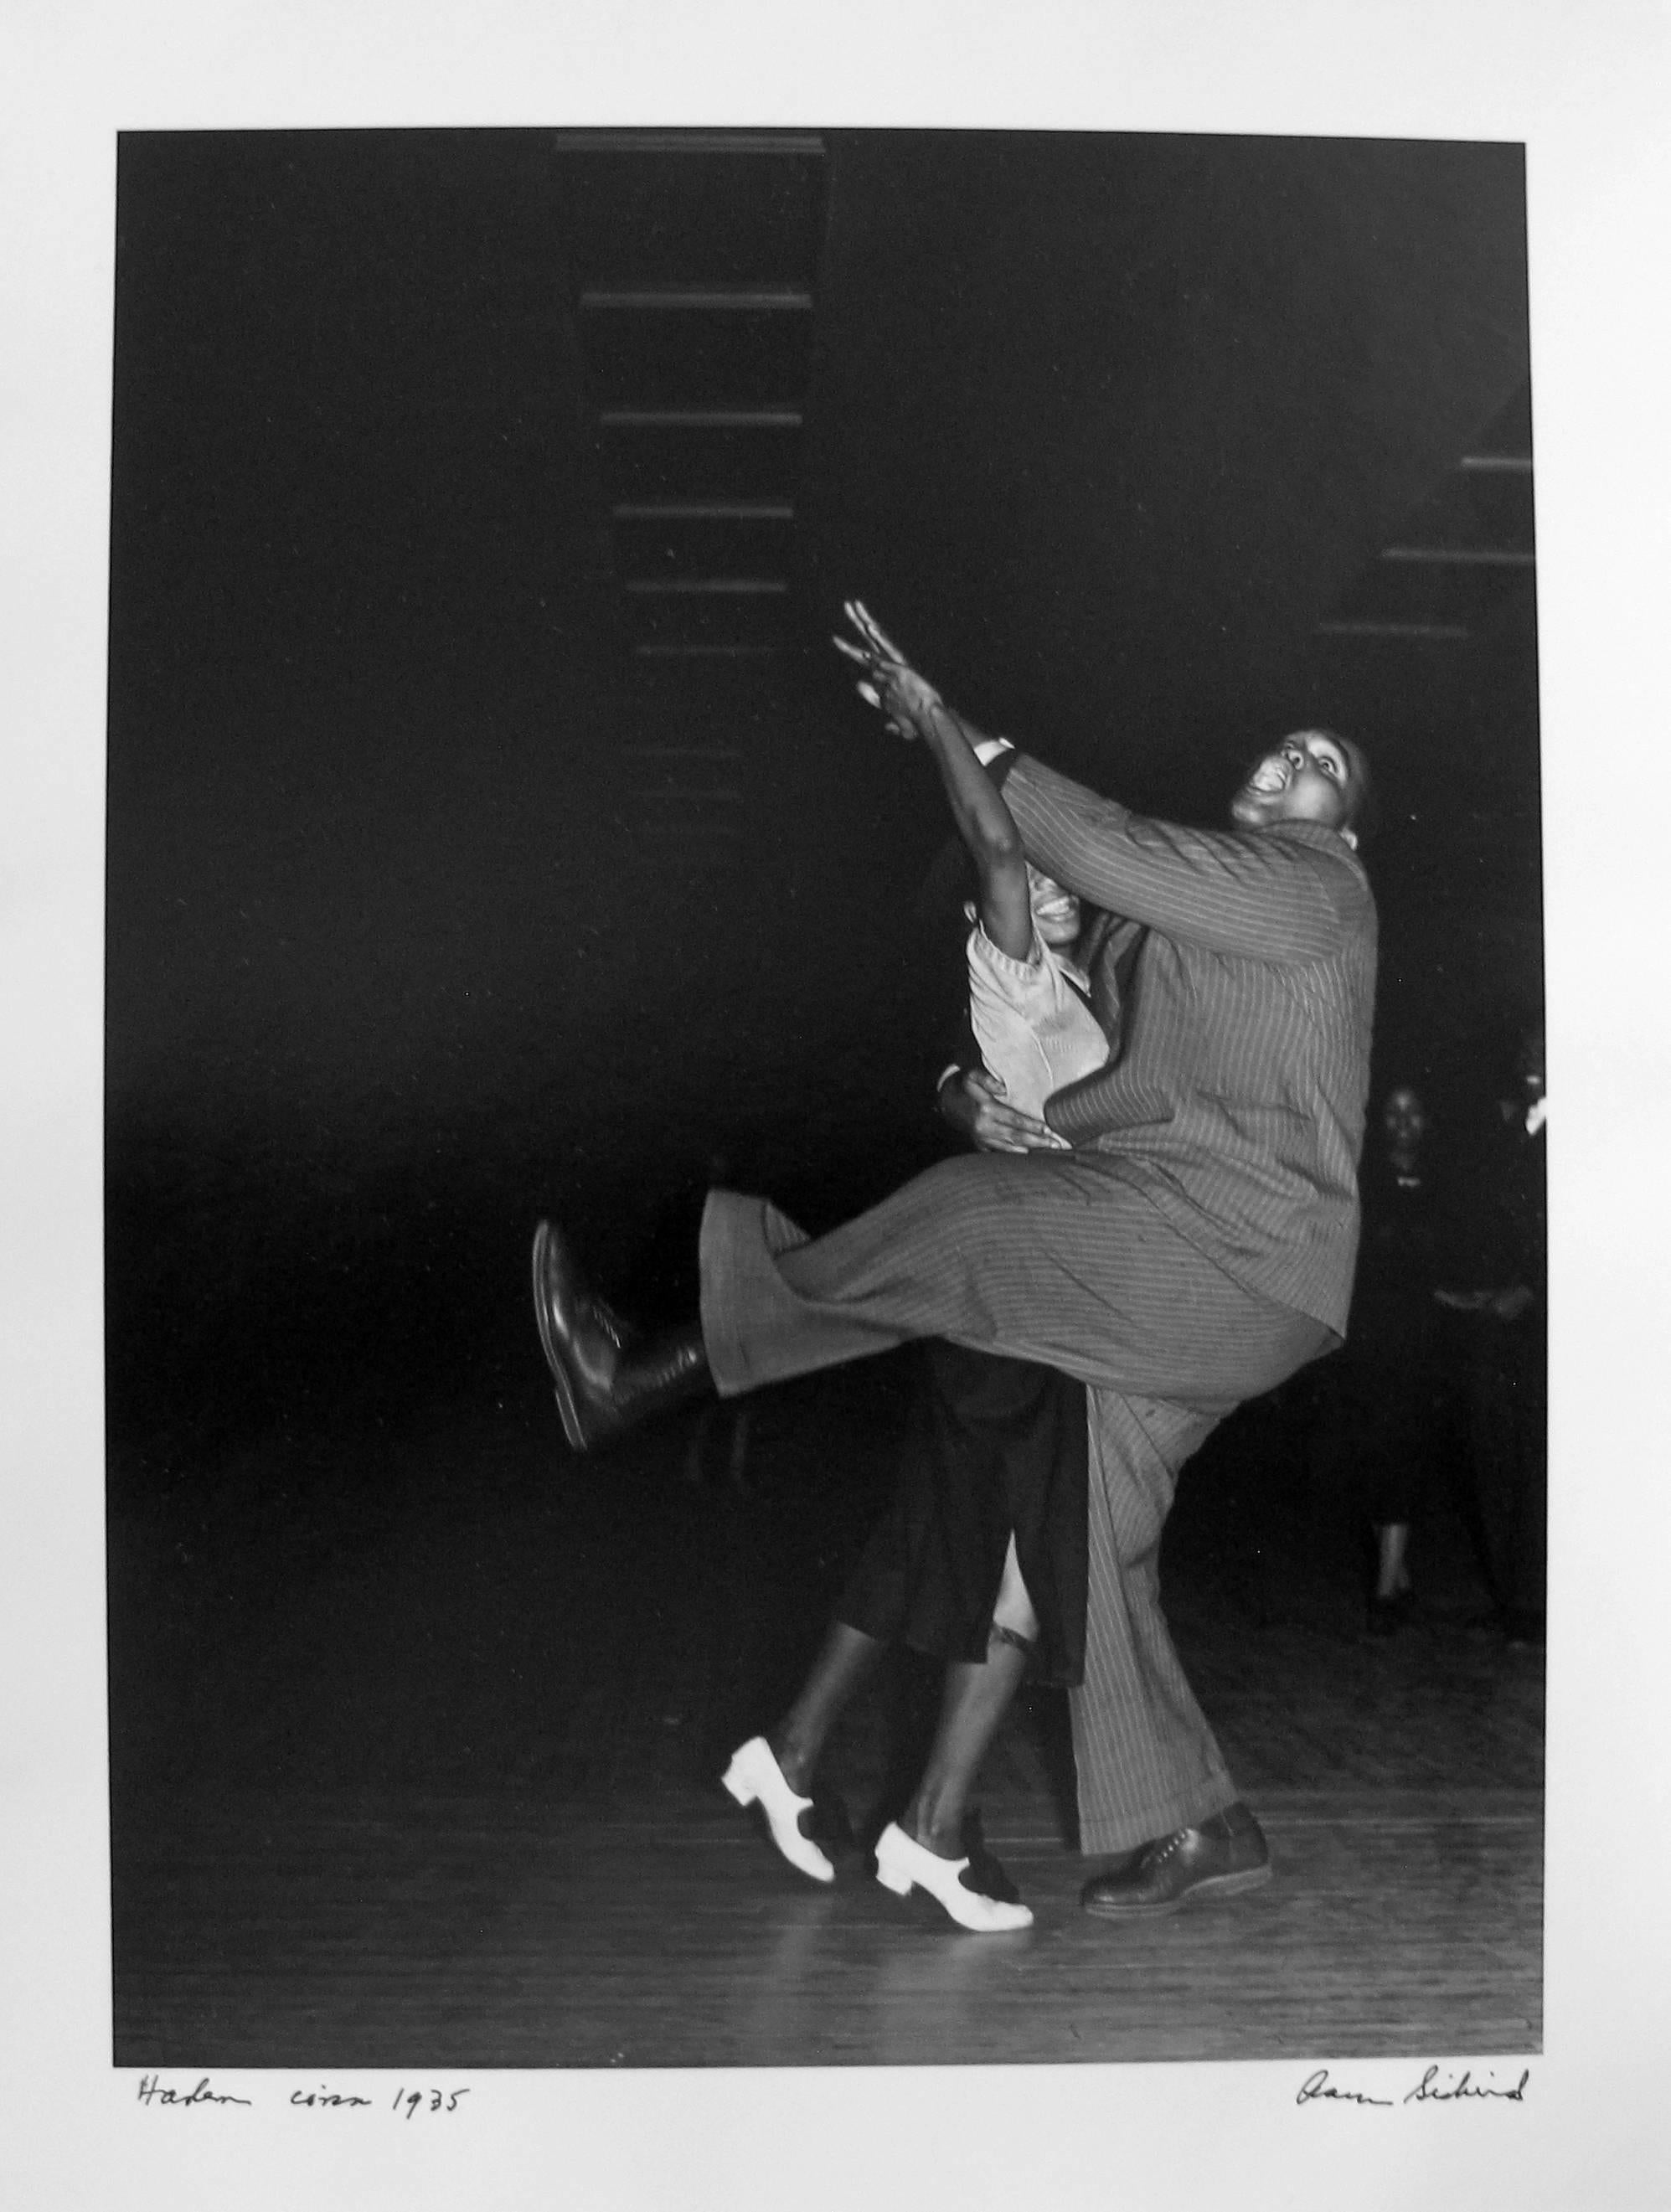 Aaron Siskind Black and White Photograph - Savoy Dancers, Harlem Document